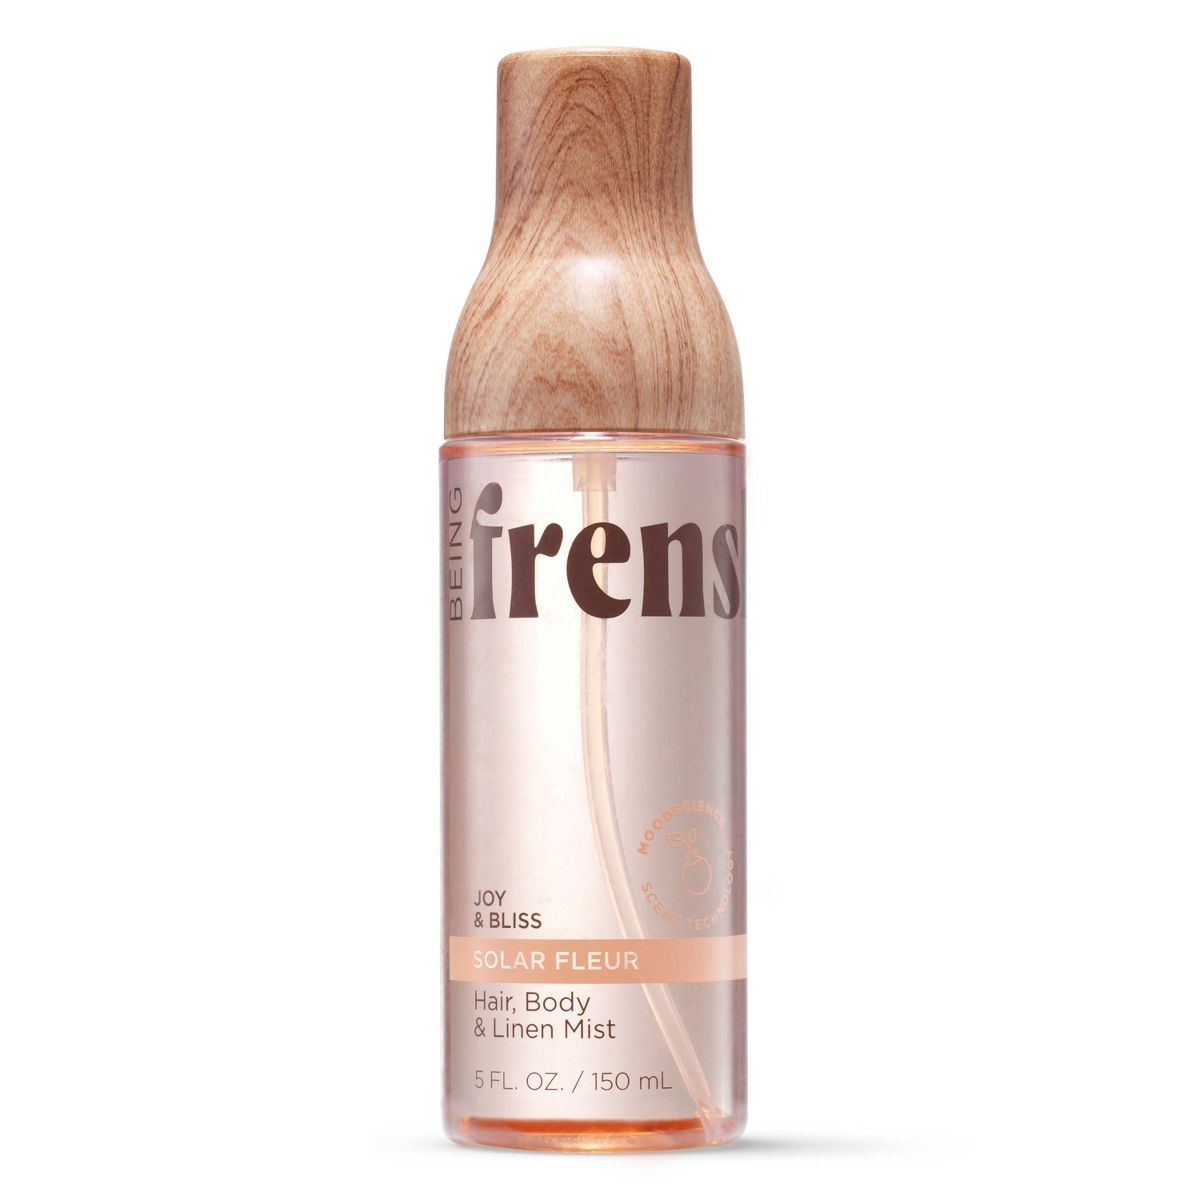 Being Frenshe Hair, Body & Linen Mist Body Spray & Hair Perfume - Solar Fleur - 5 fl oz | Target